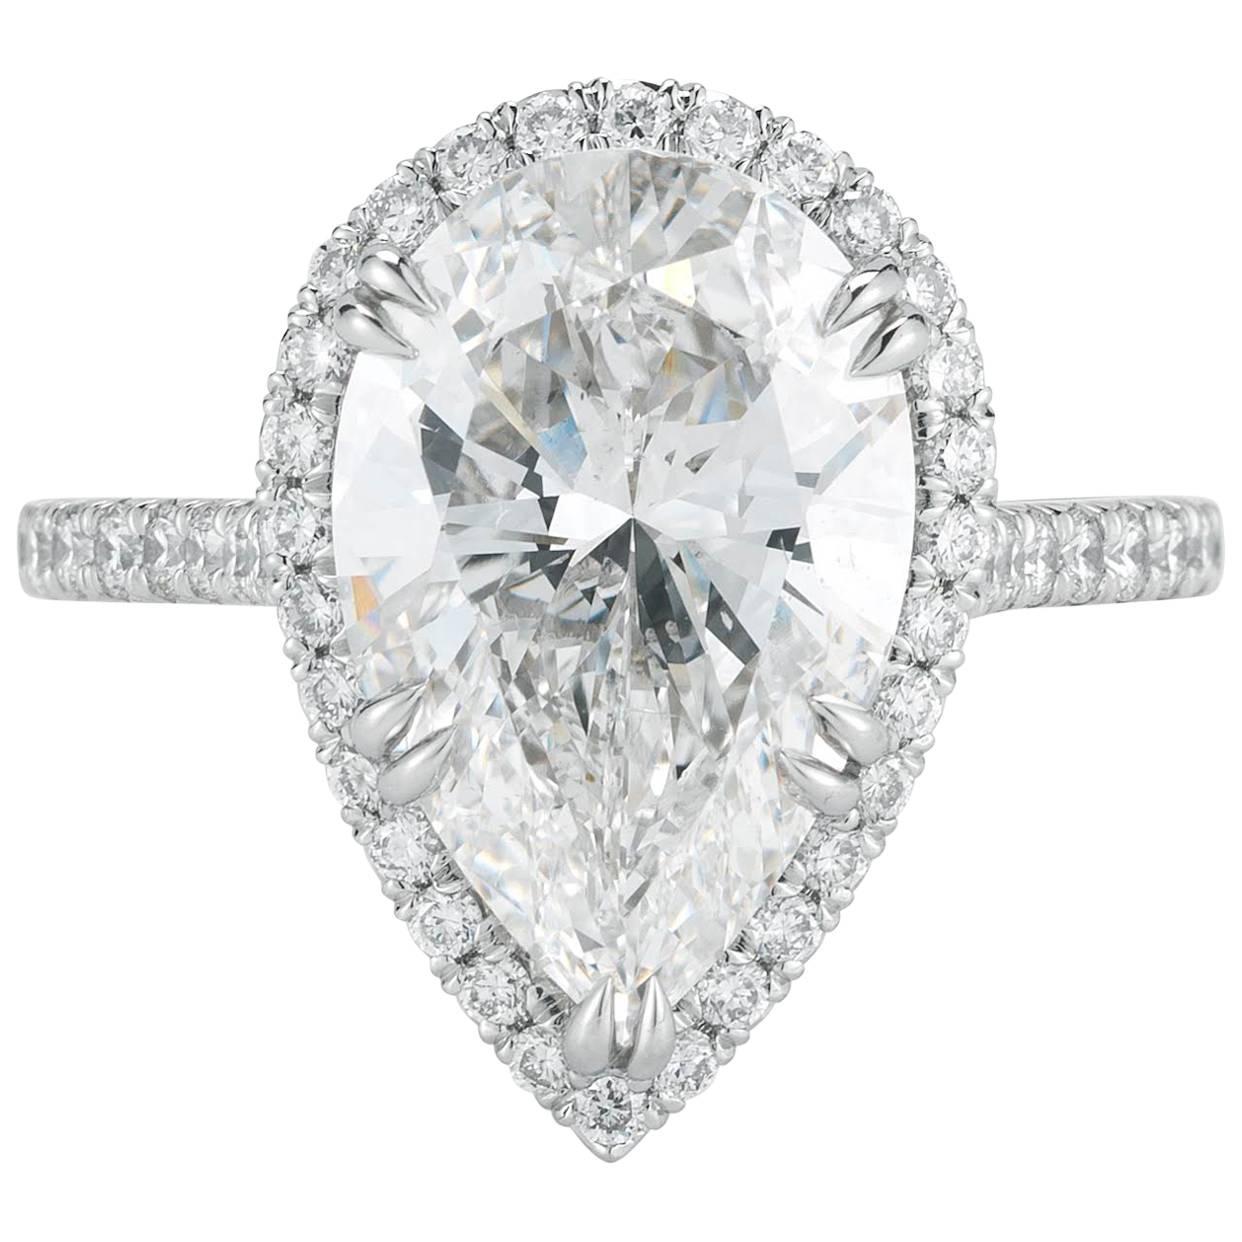 5.01 Carat Pear Shape Diamond Engagement Ring